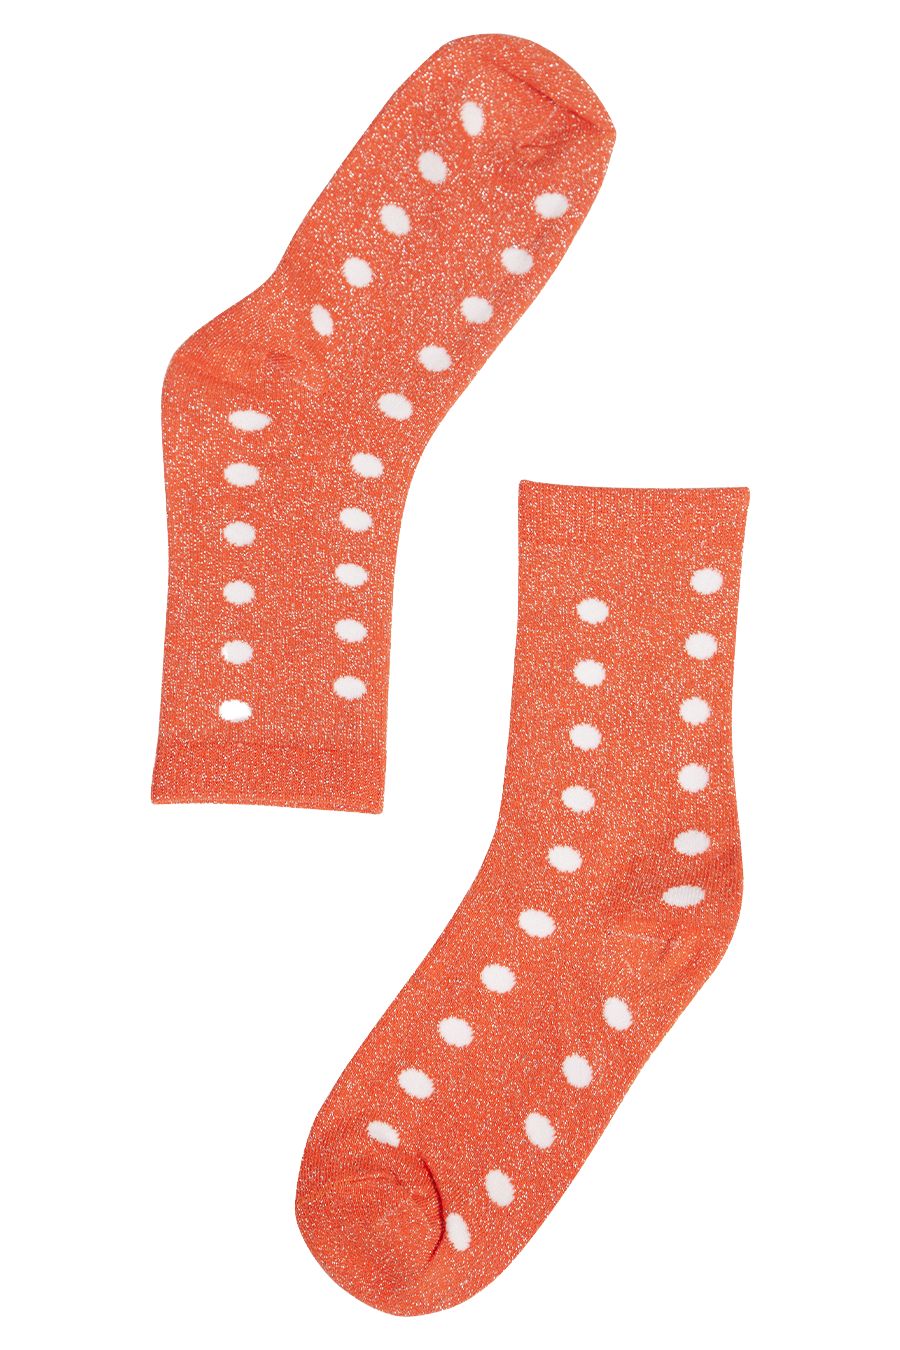 orange and white polka dot glitter ankle socks